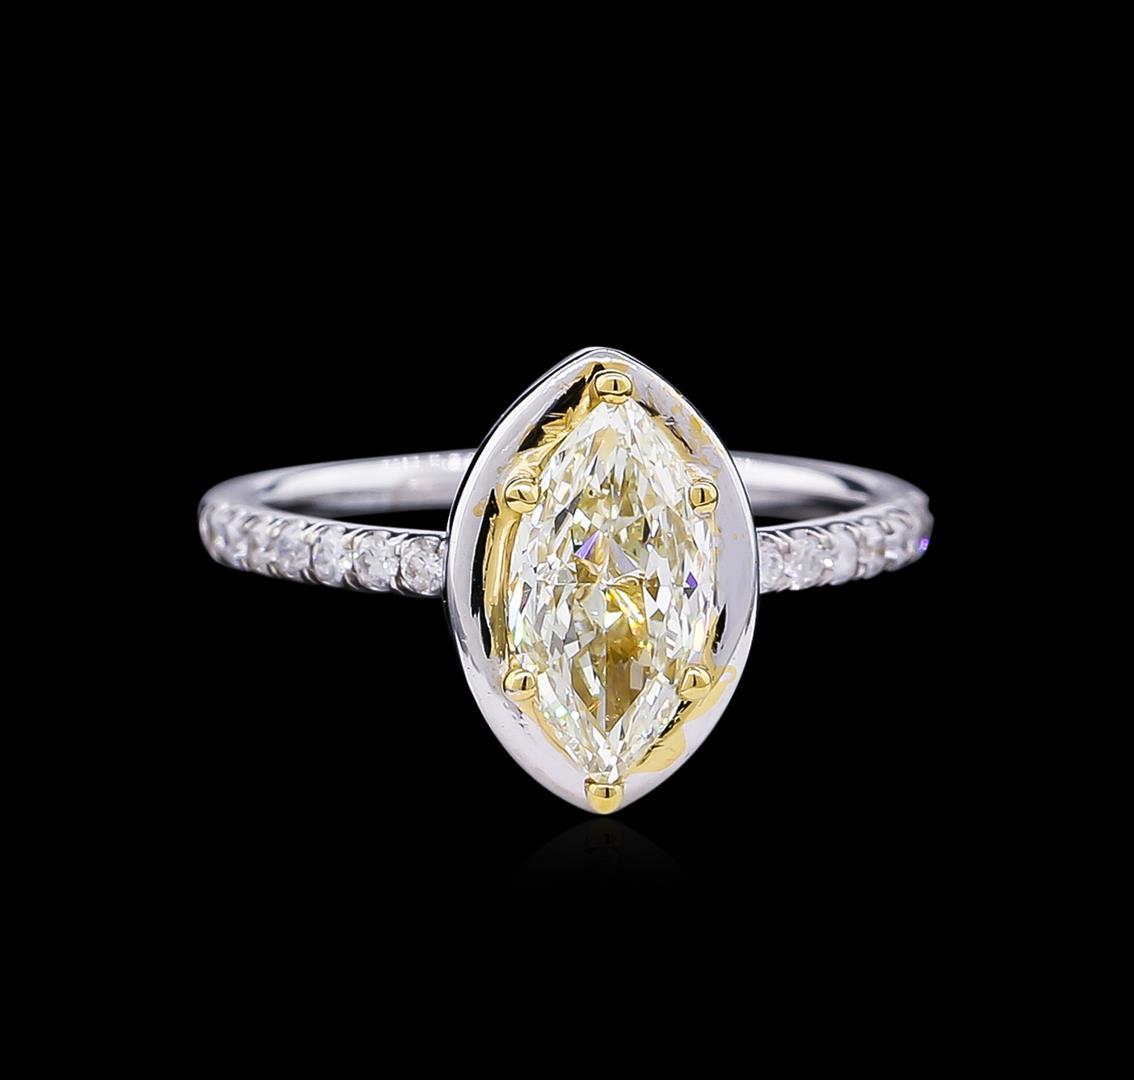 1.41 ctw Fancy Light Yellow Diamond Ring - 14KT Two-Tone Gold